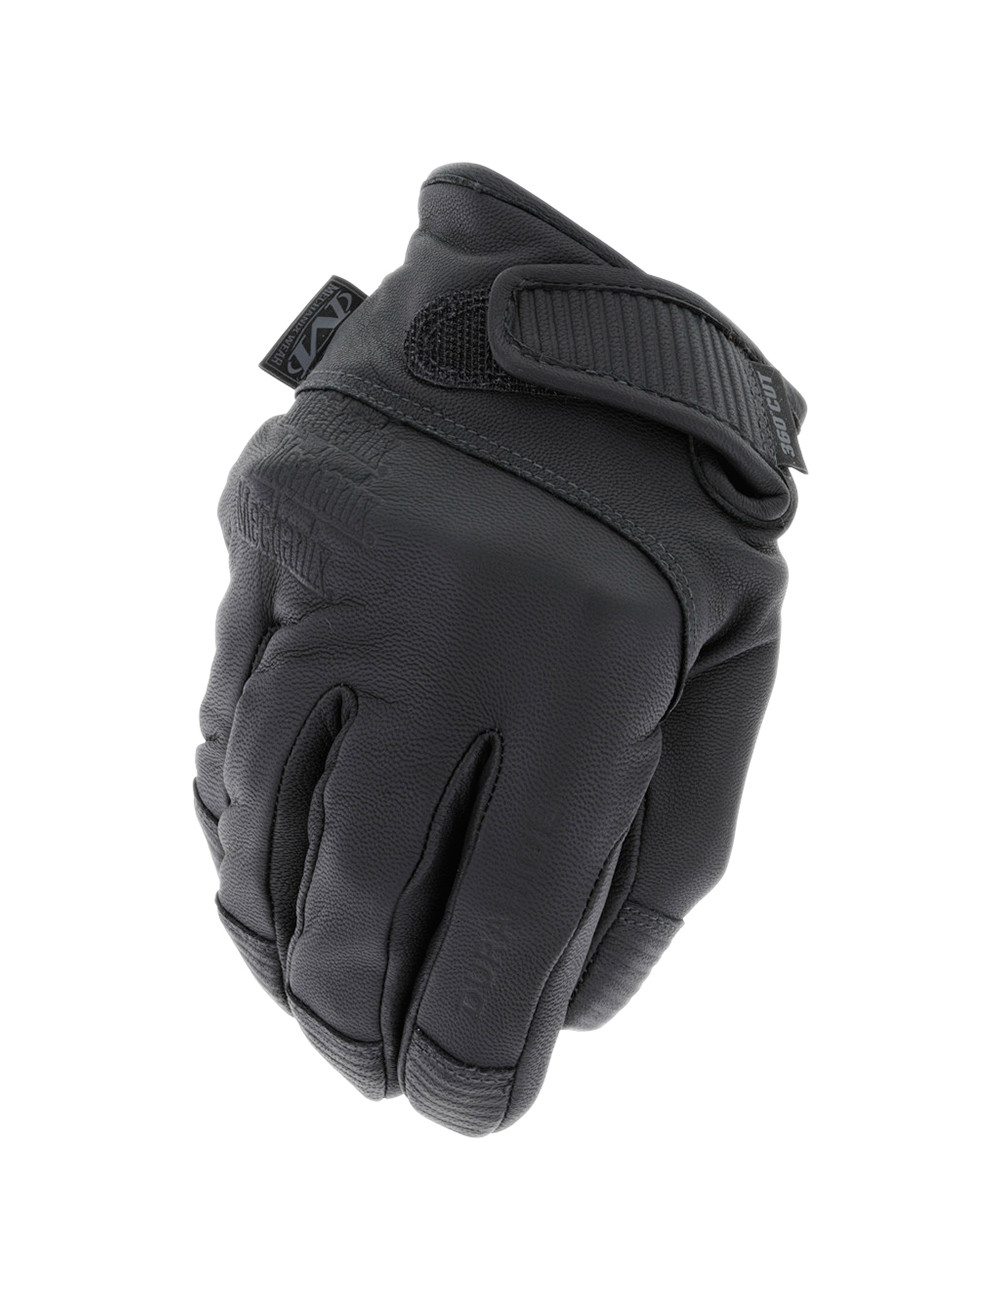 MECHANIX NSLE-55-009 Leather Needlestick Law Enforcement Gloves M